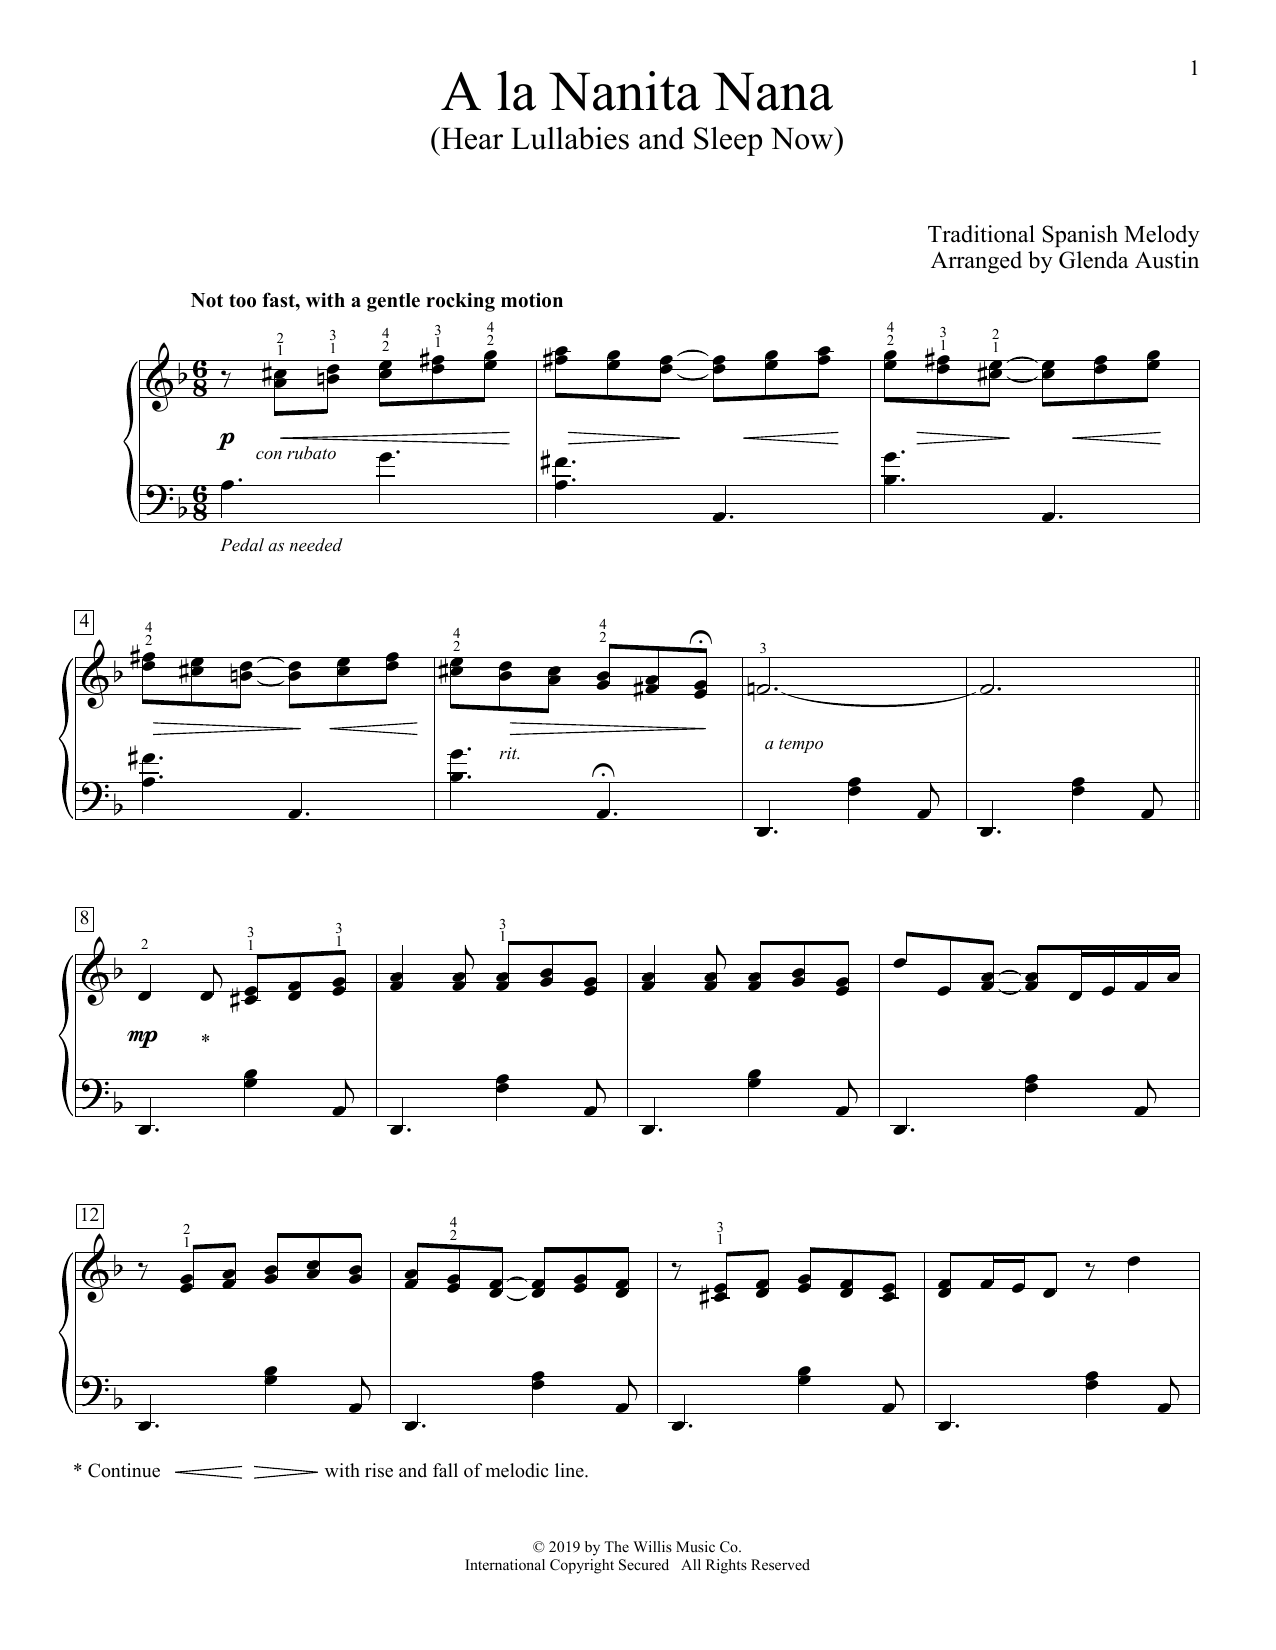 Traditional Spanish Melody A La Nanita Nana (Hear Lullabies And Sleep Now) (arr. Glenda Austin) Sheet Music Notes & Chords for Piano Solo - Download or Print PDF